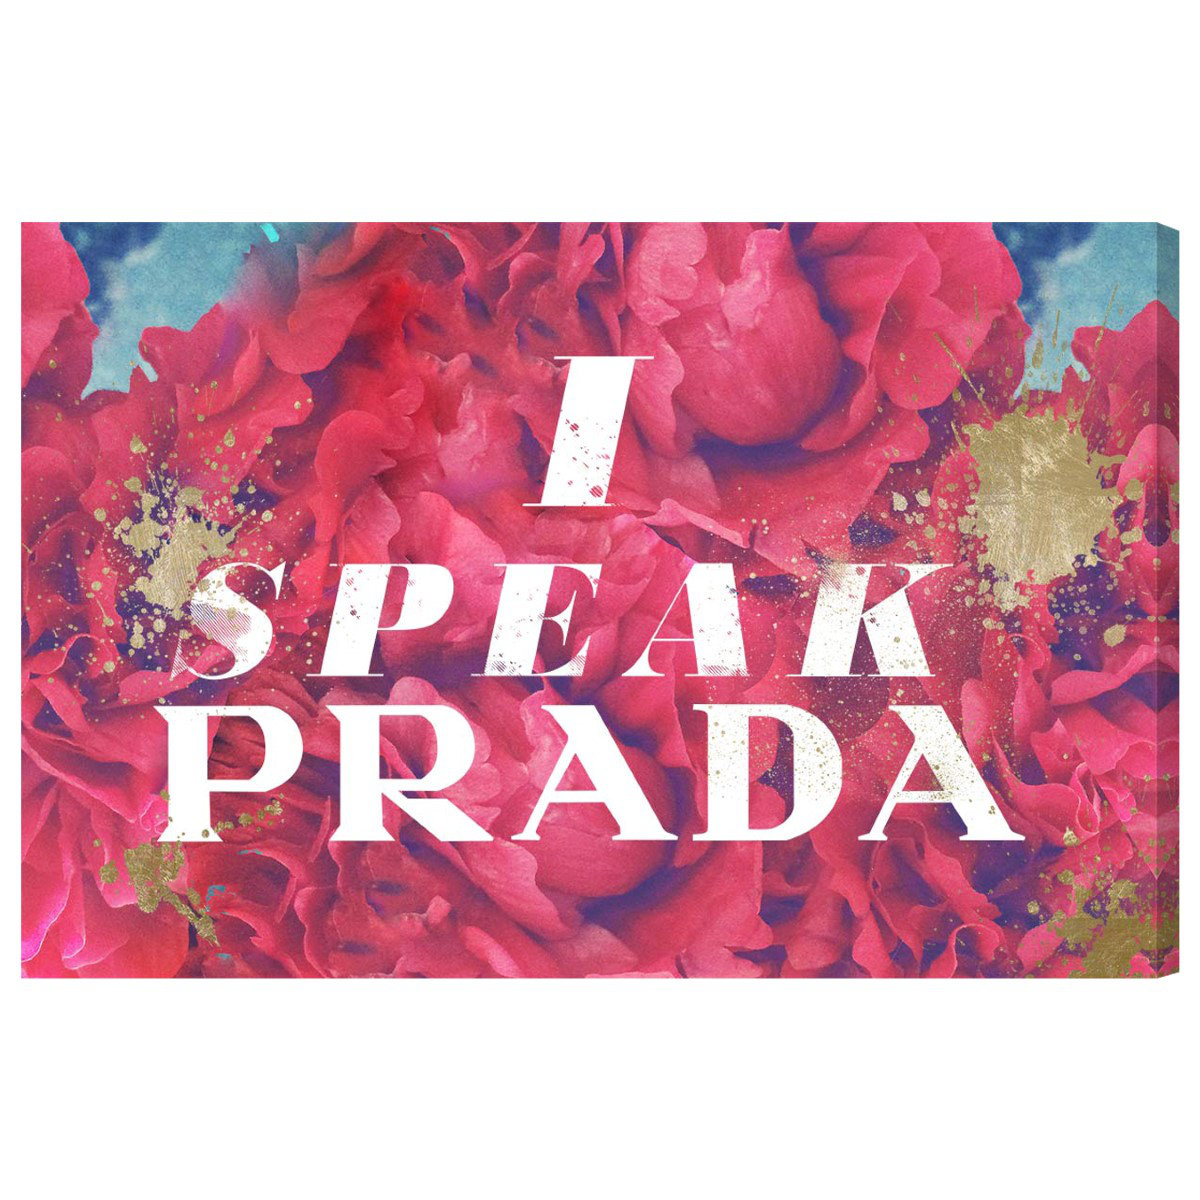 Speak Prada' - Print on Canvas | Wayfair